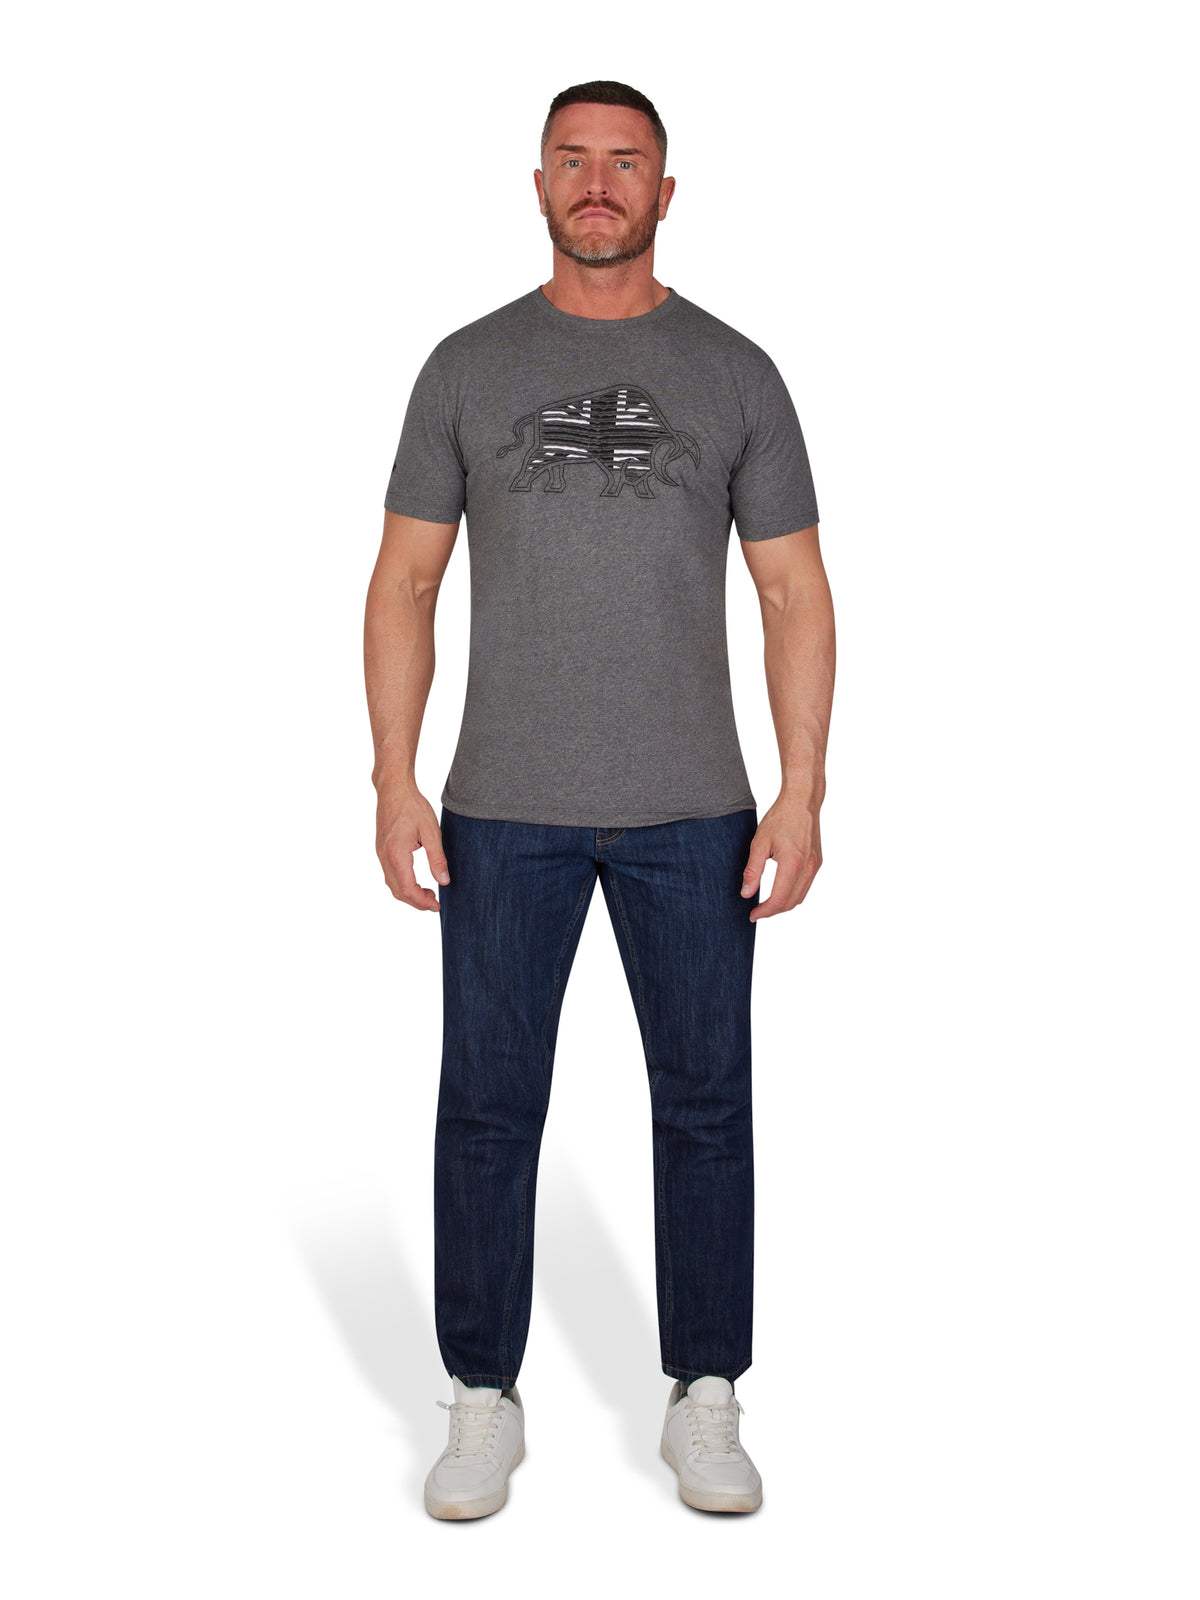 Slash Bull Monochrome T-Shirt - Charcoal